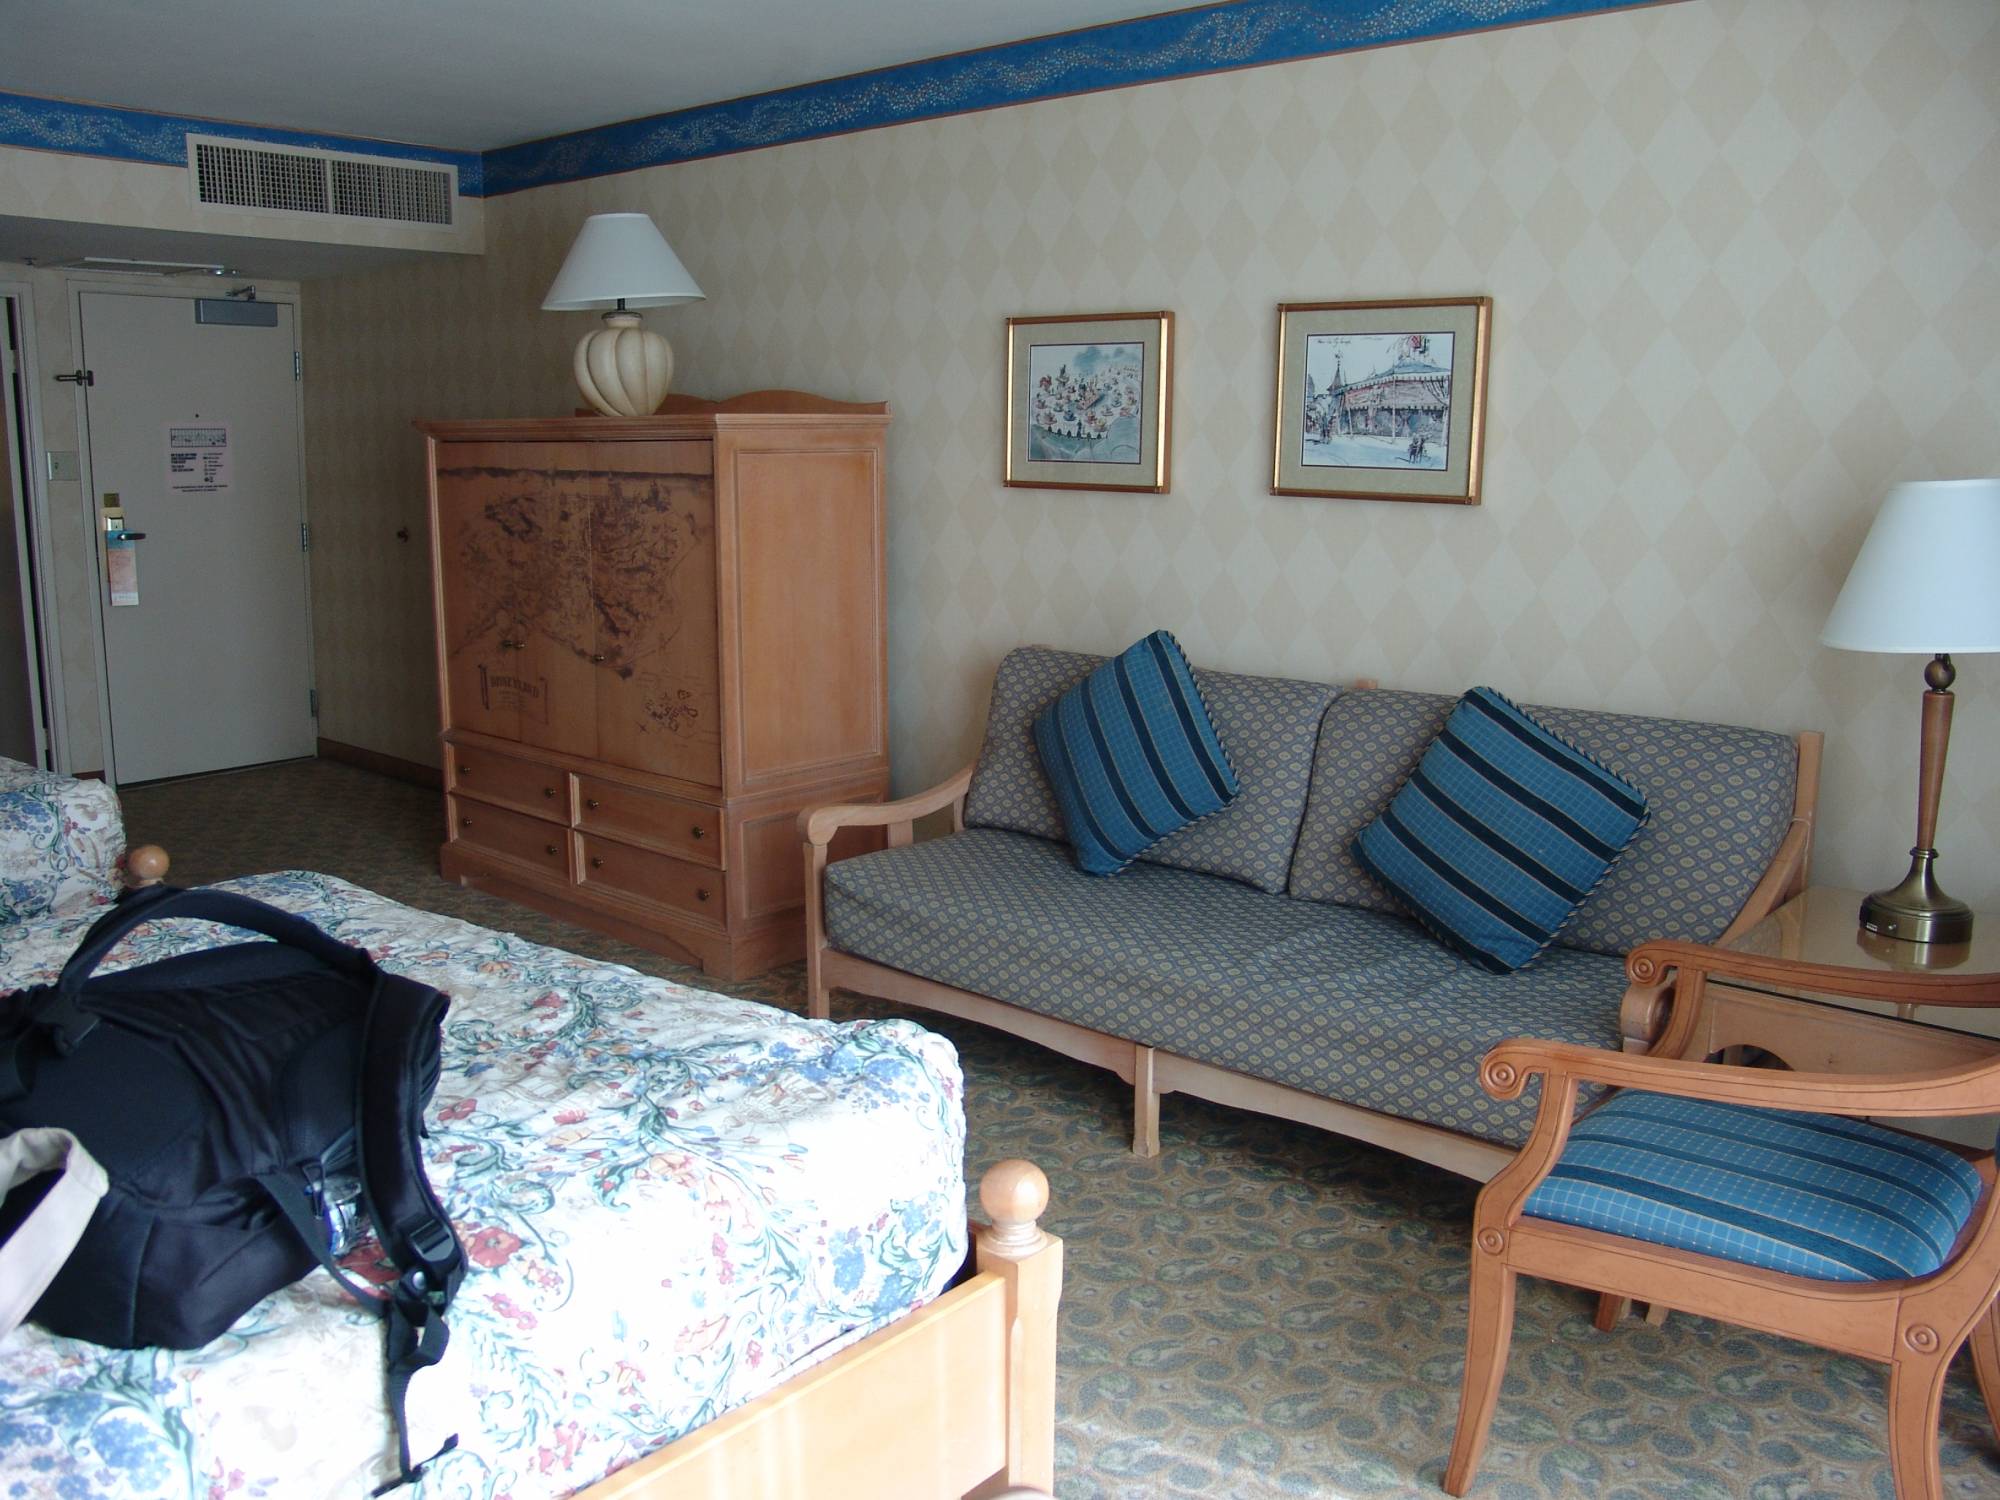 Disneyland Hotel - guest room